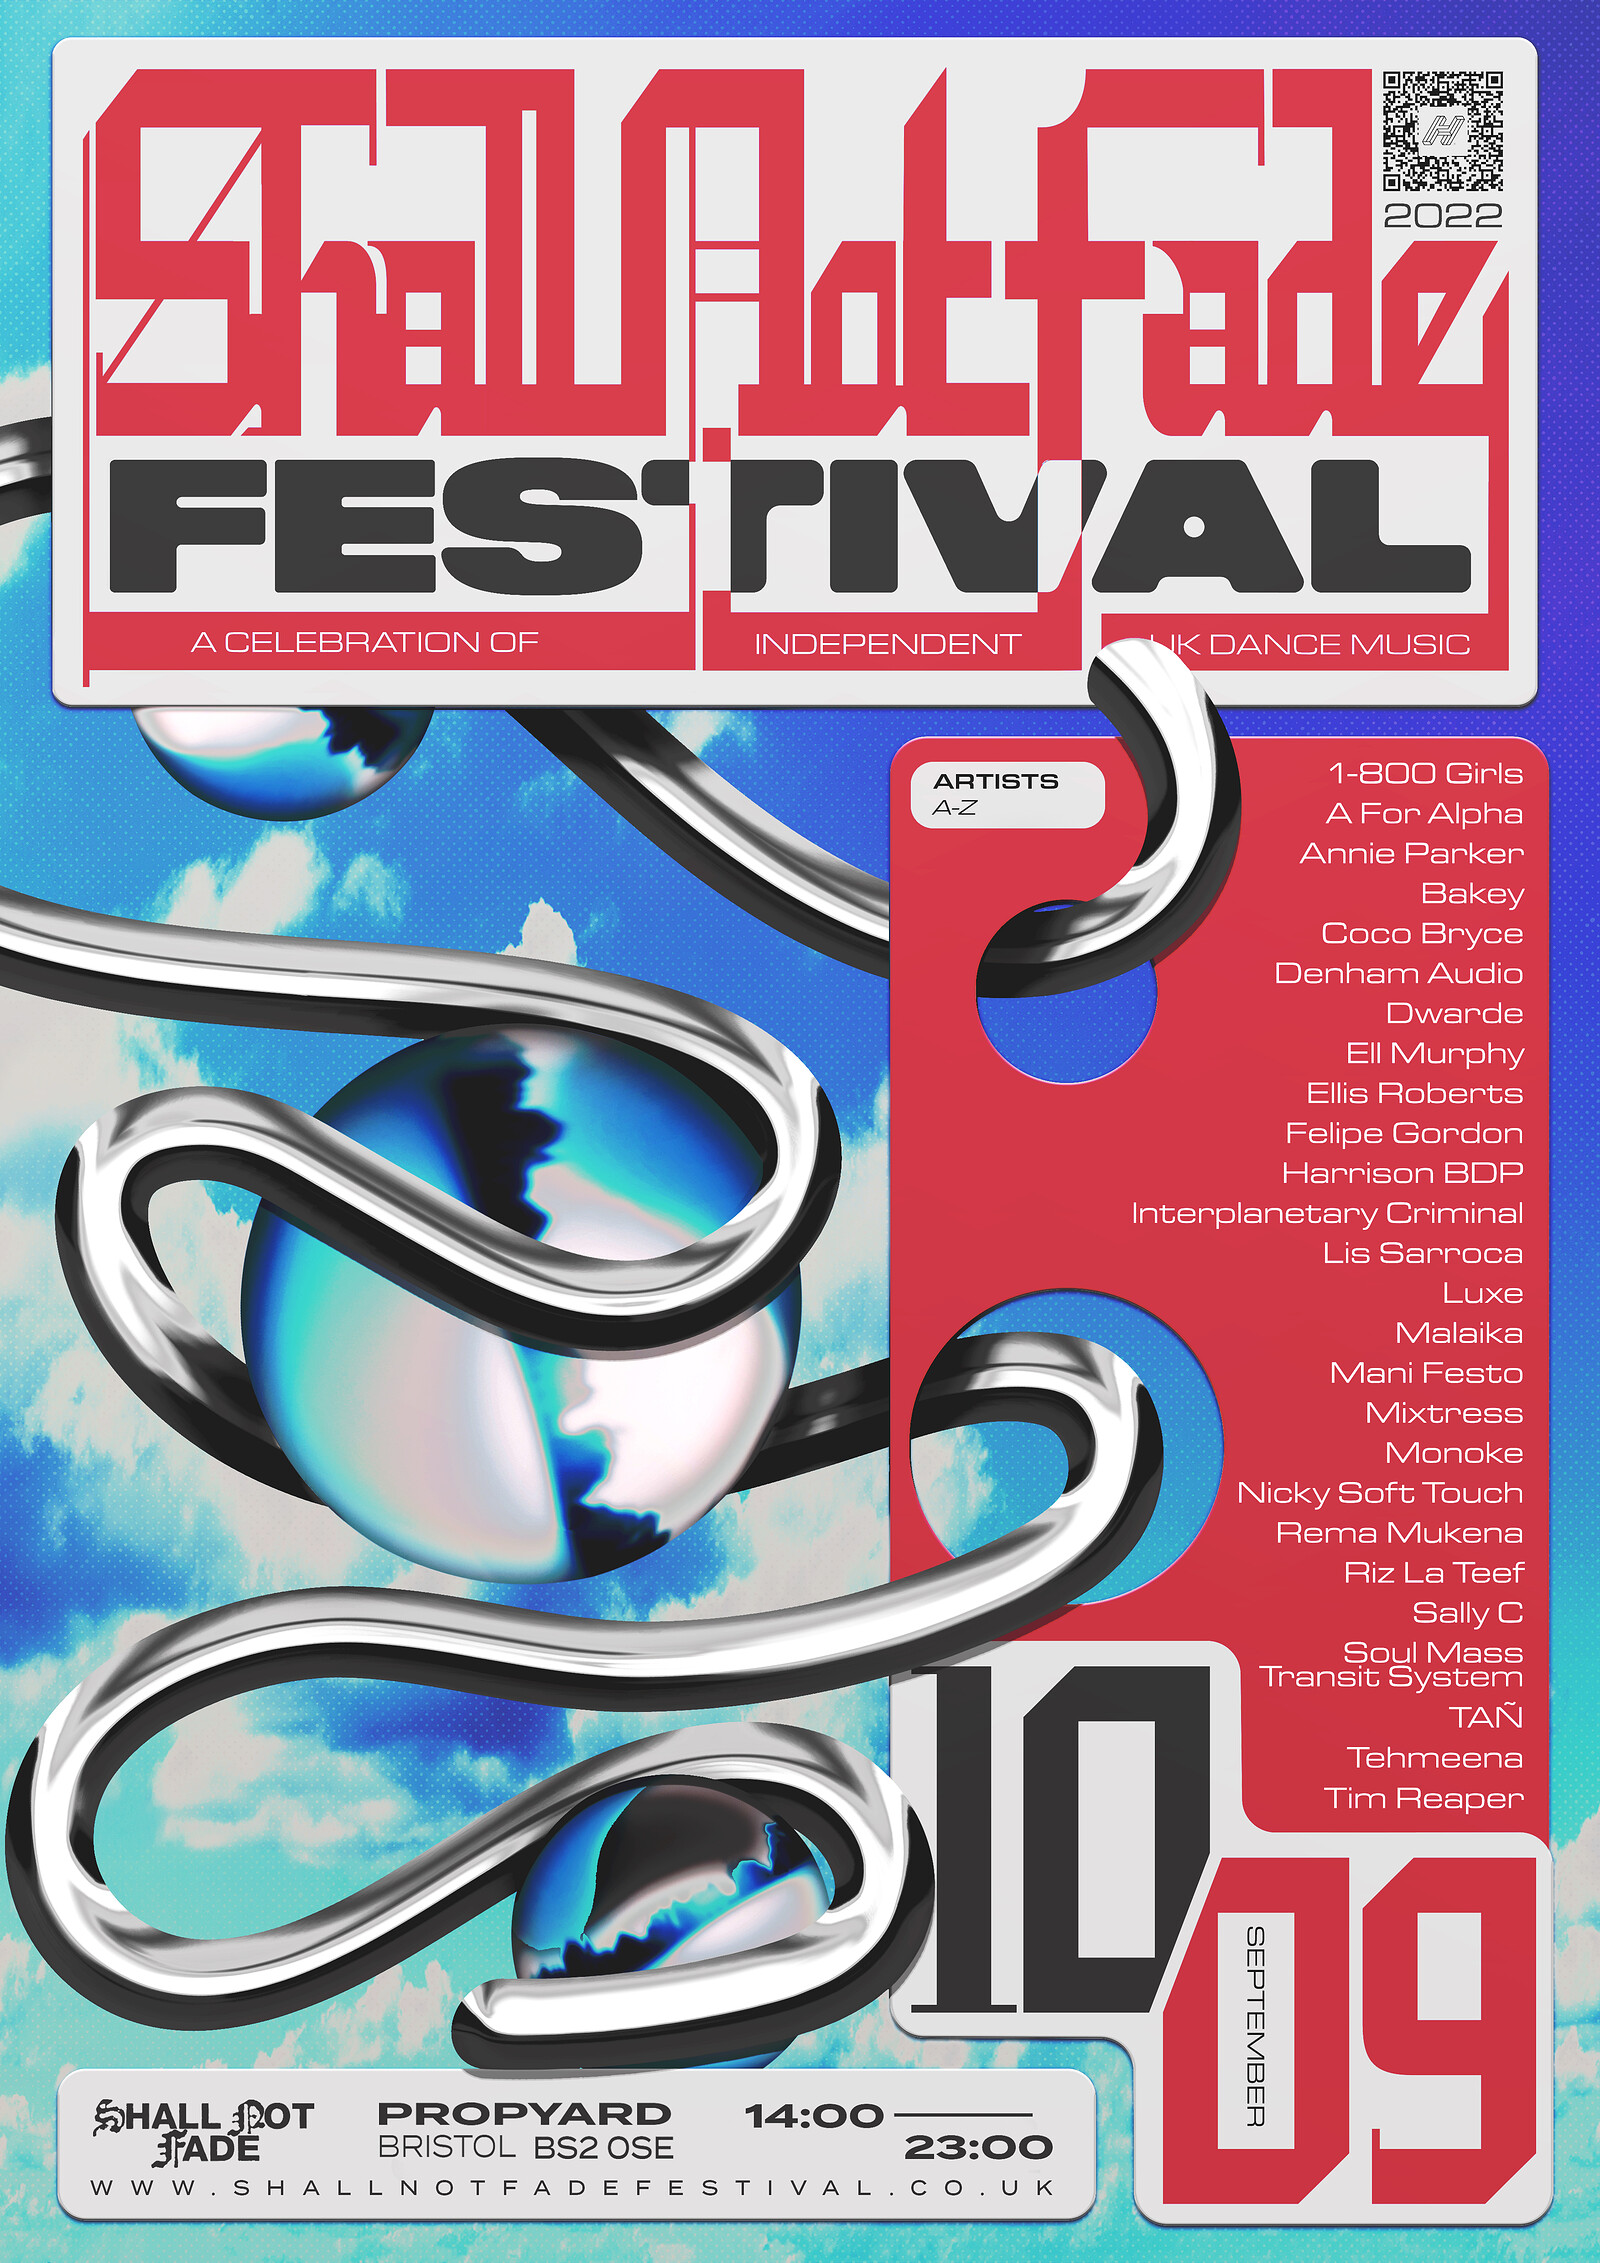 Shall Not Fade Festival 2022 at Propyard